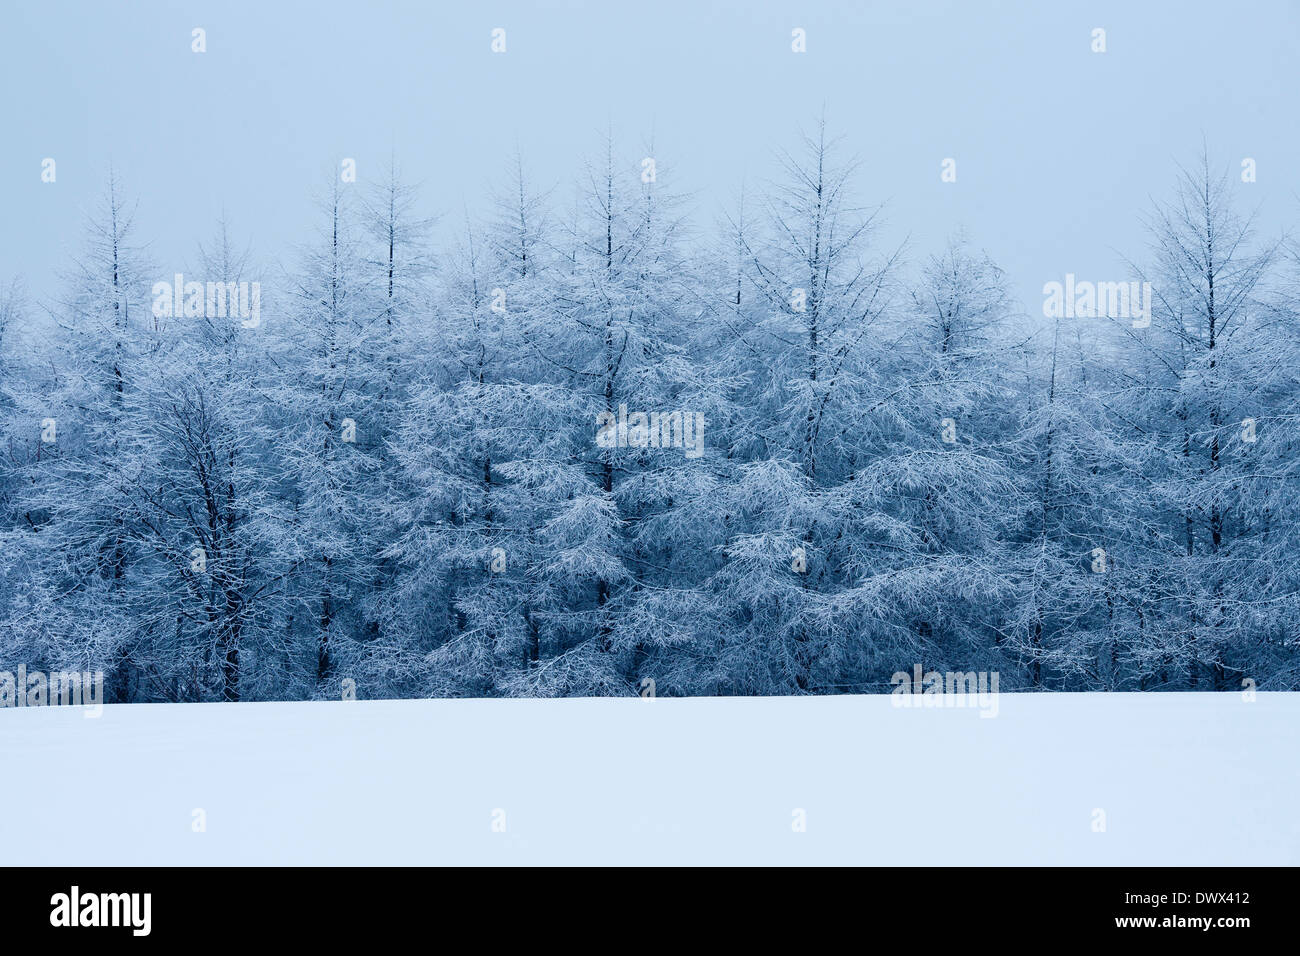 Ohmine Highland covered in snow, Nagano, Japan Stock Photo